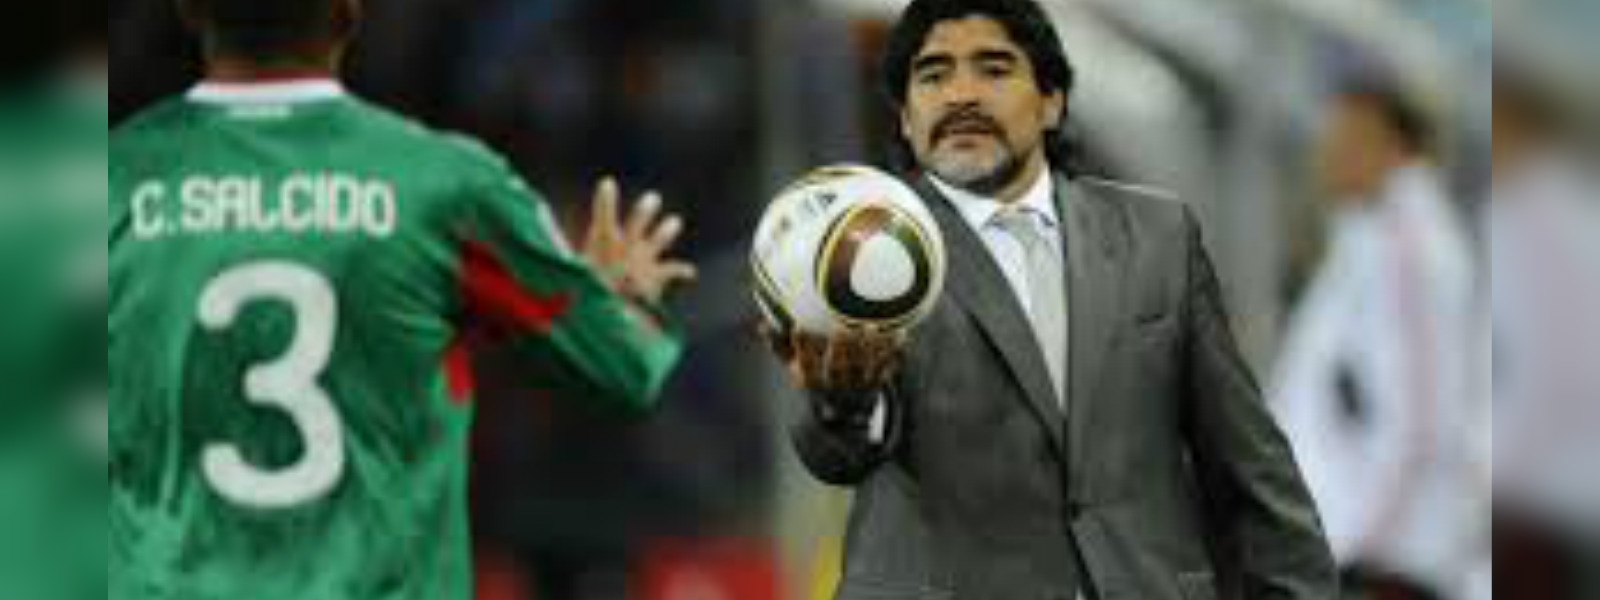 Maradona achieves first win as coach of Dorados